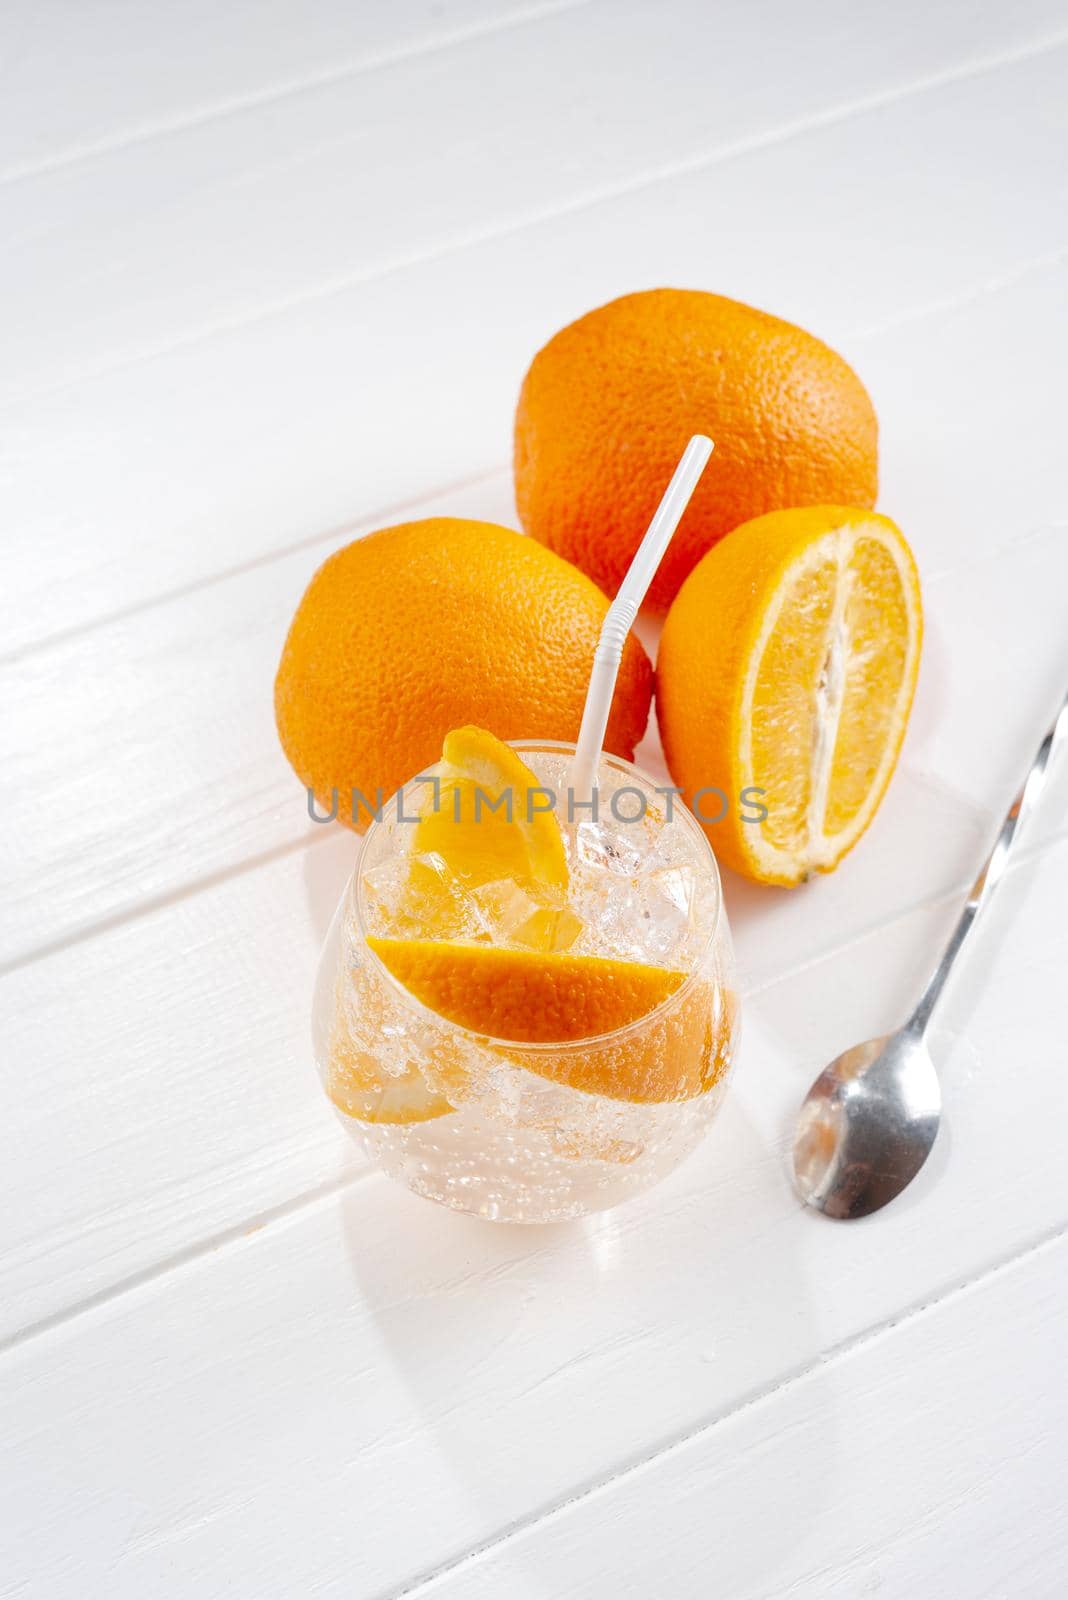 Cold fresh orange lemonade on wooden light background by gulyaevstudio